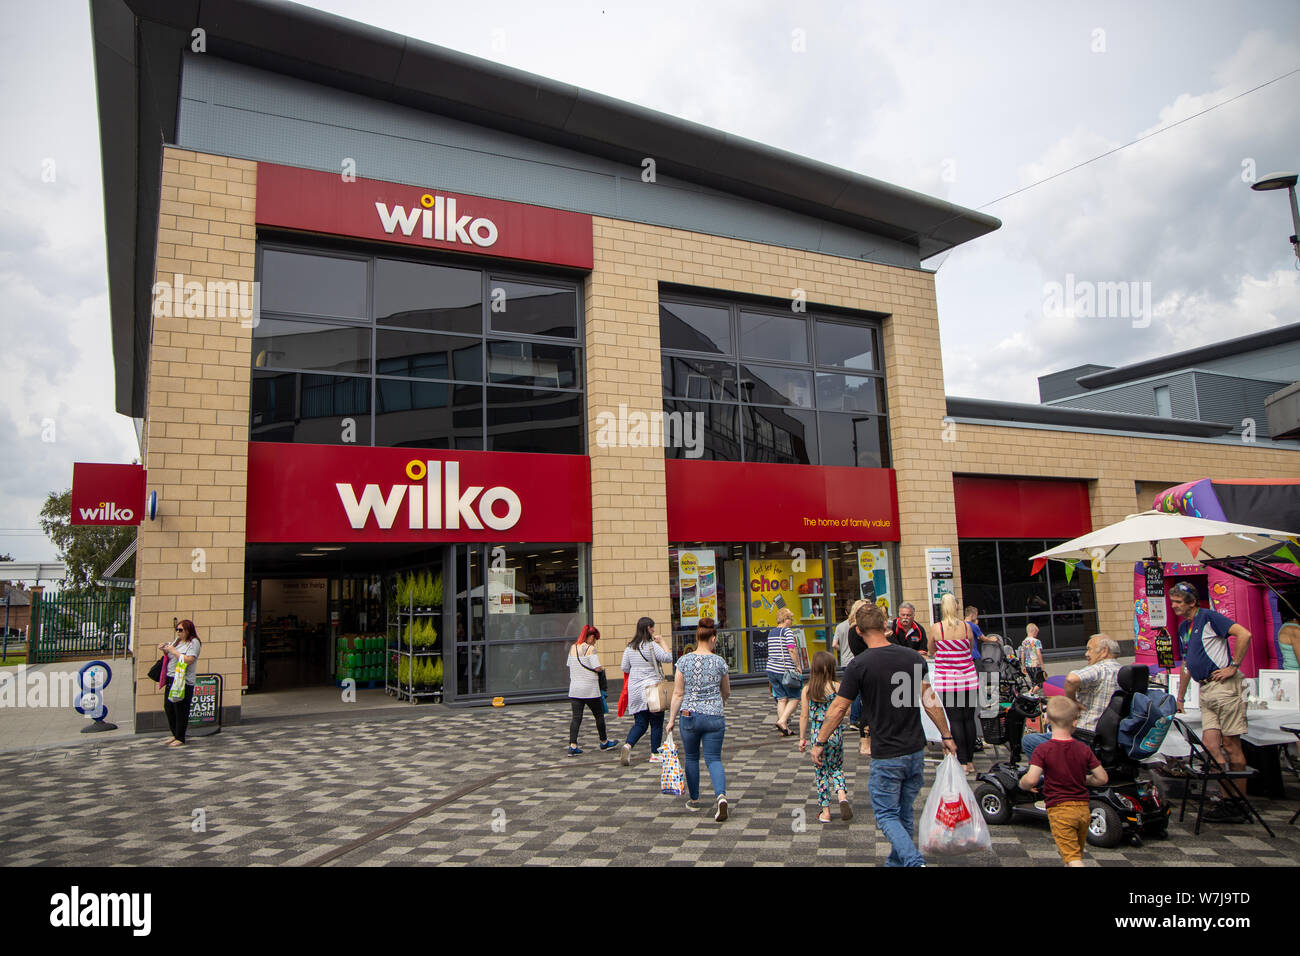 Wilko shopfront, Wythenshawe Market, Manchester Stock Photo